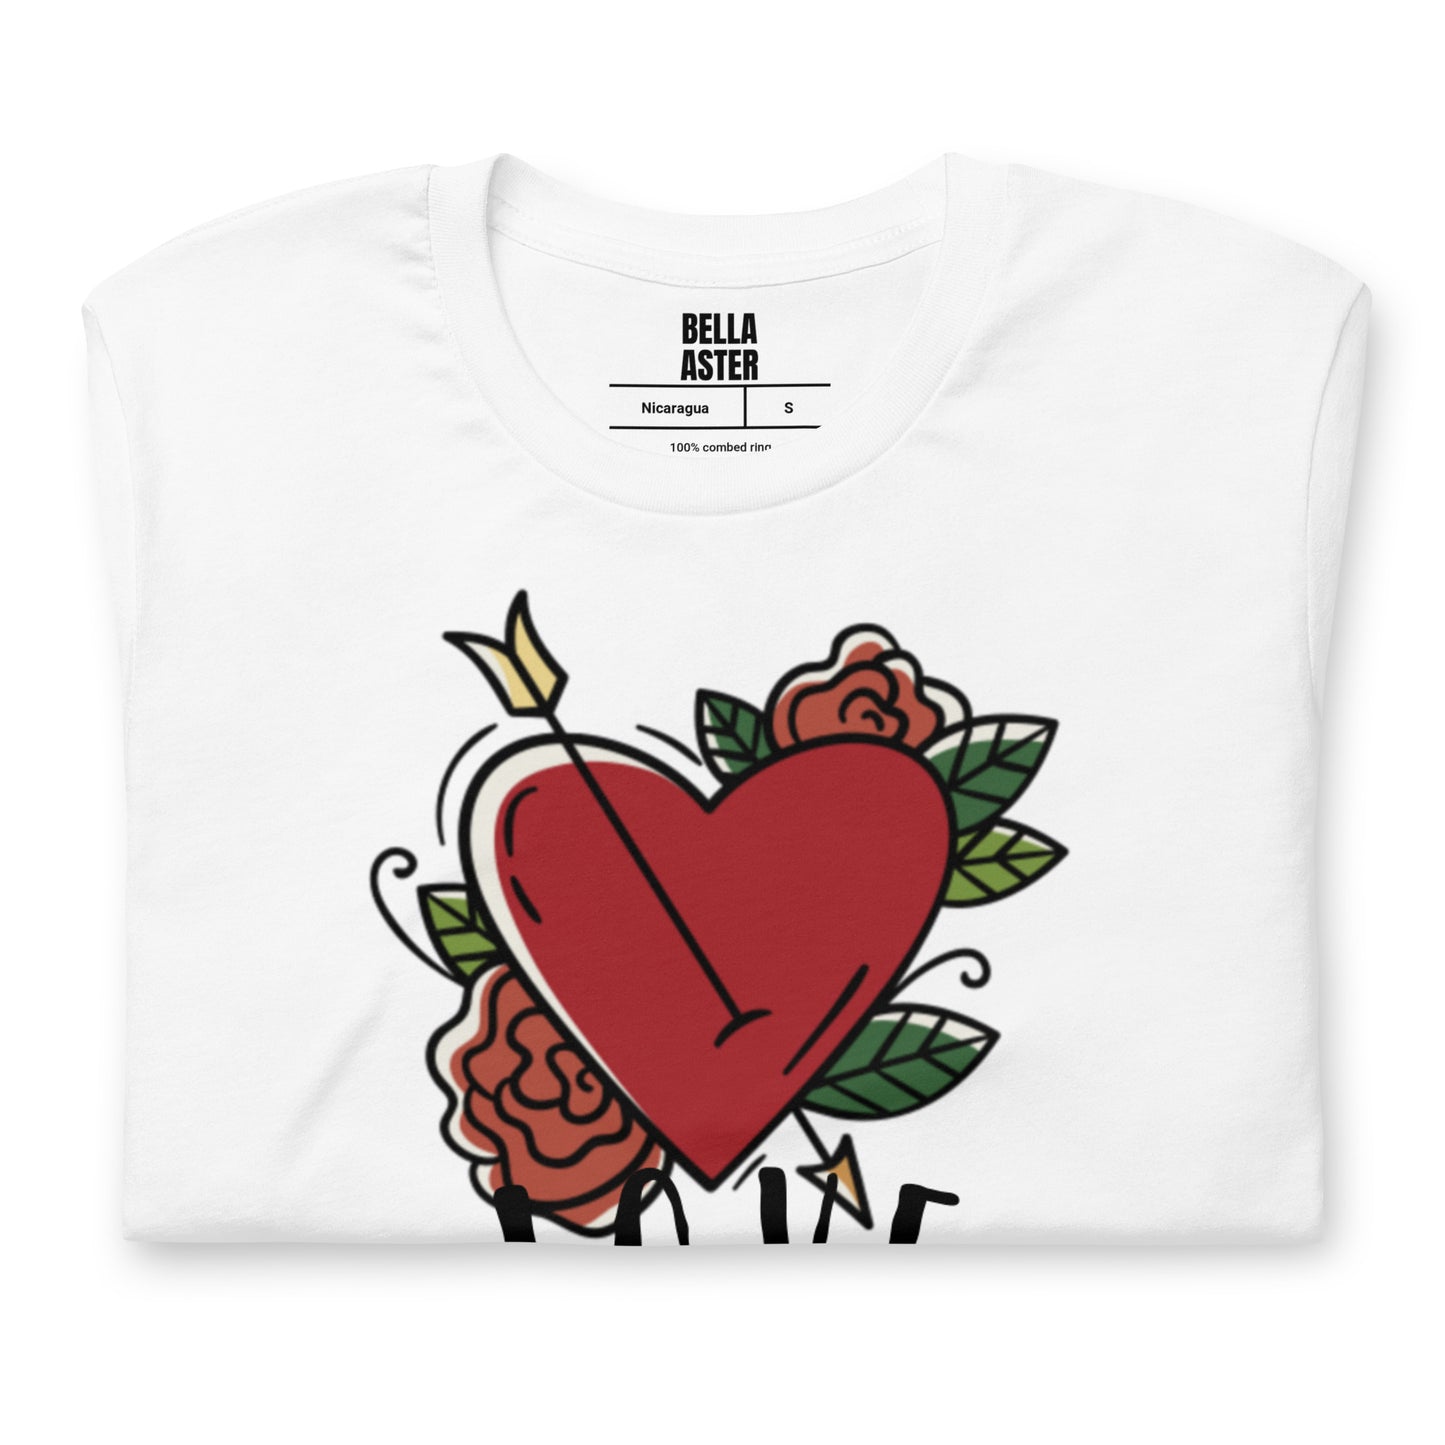 Love Short-Sleeve Unisex T-Shirt